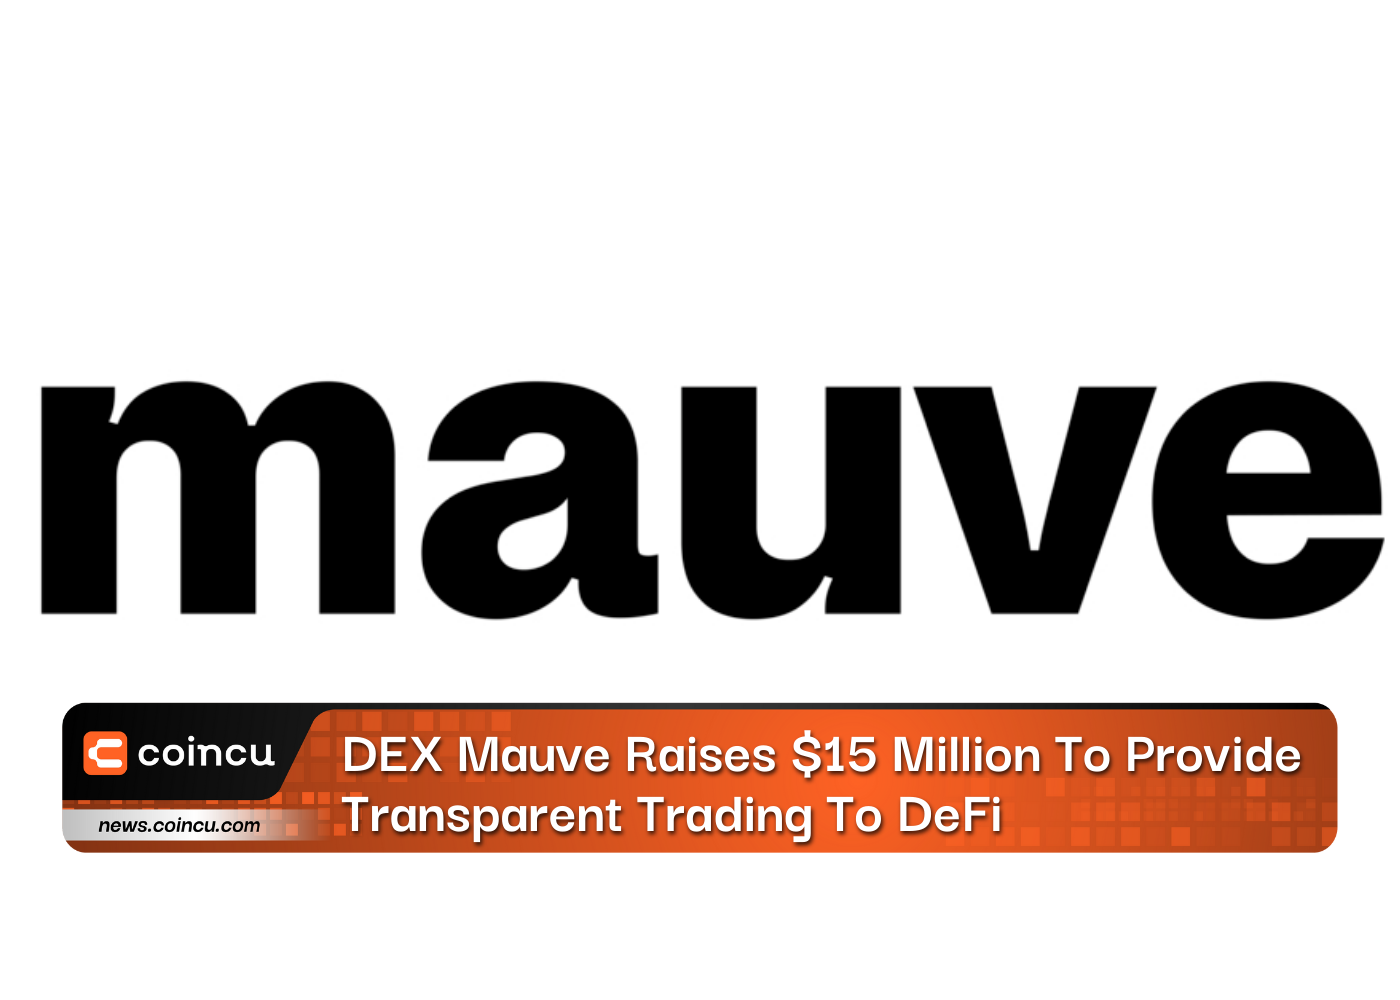 DEX Mauve Raises $15 Million To Provide Transparent Trading To DeFi